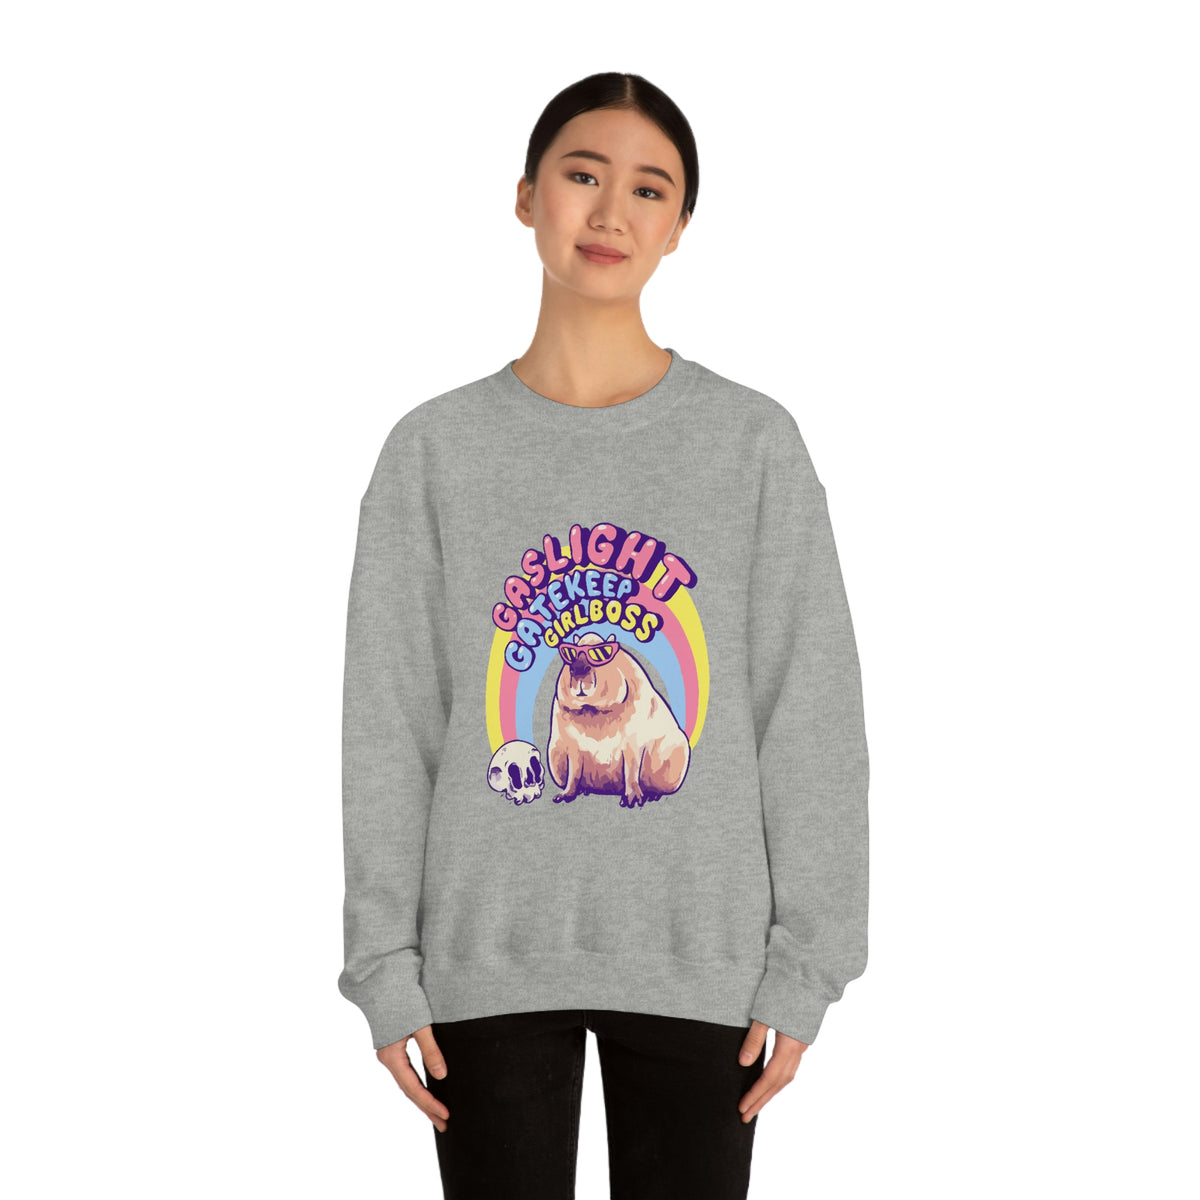 Gaslight Gatekeep Girlboss - Unisex Sweatshirt